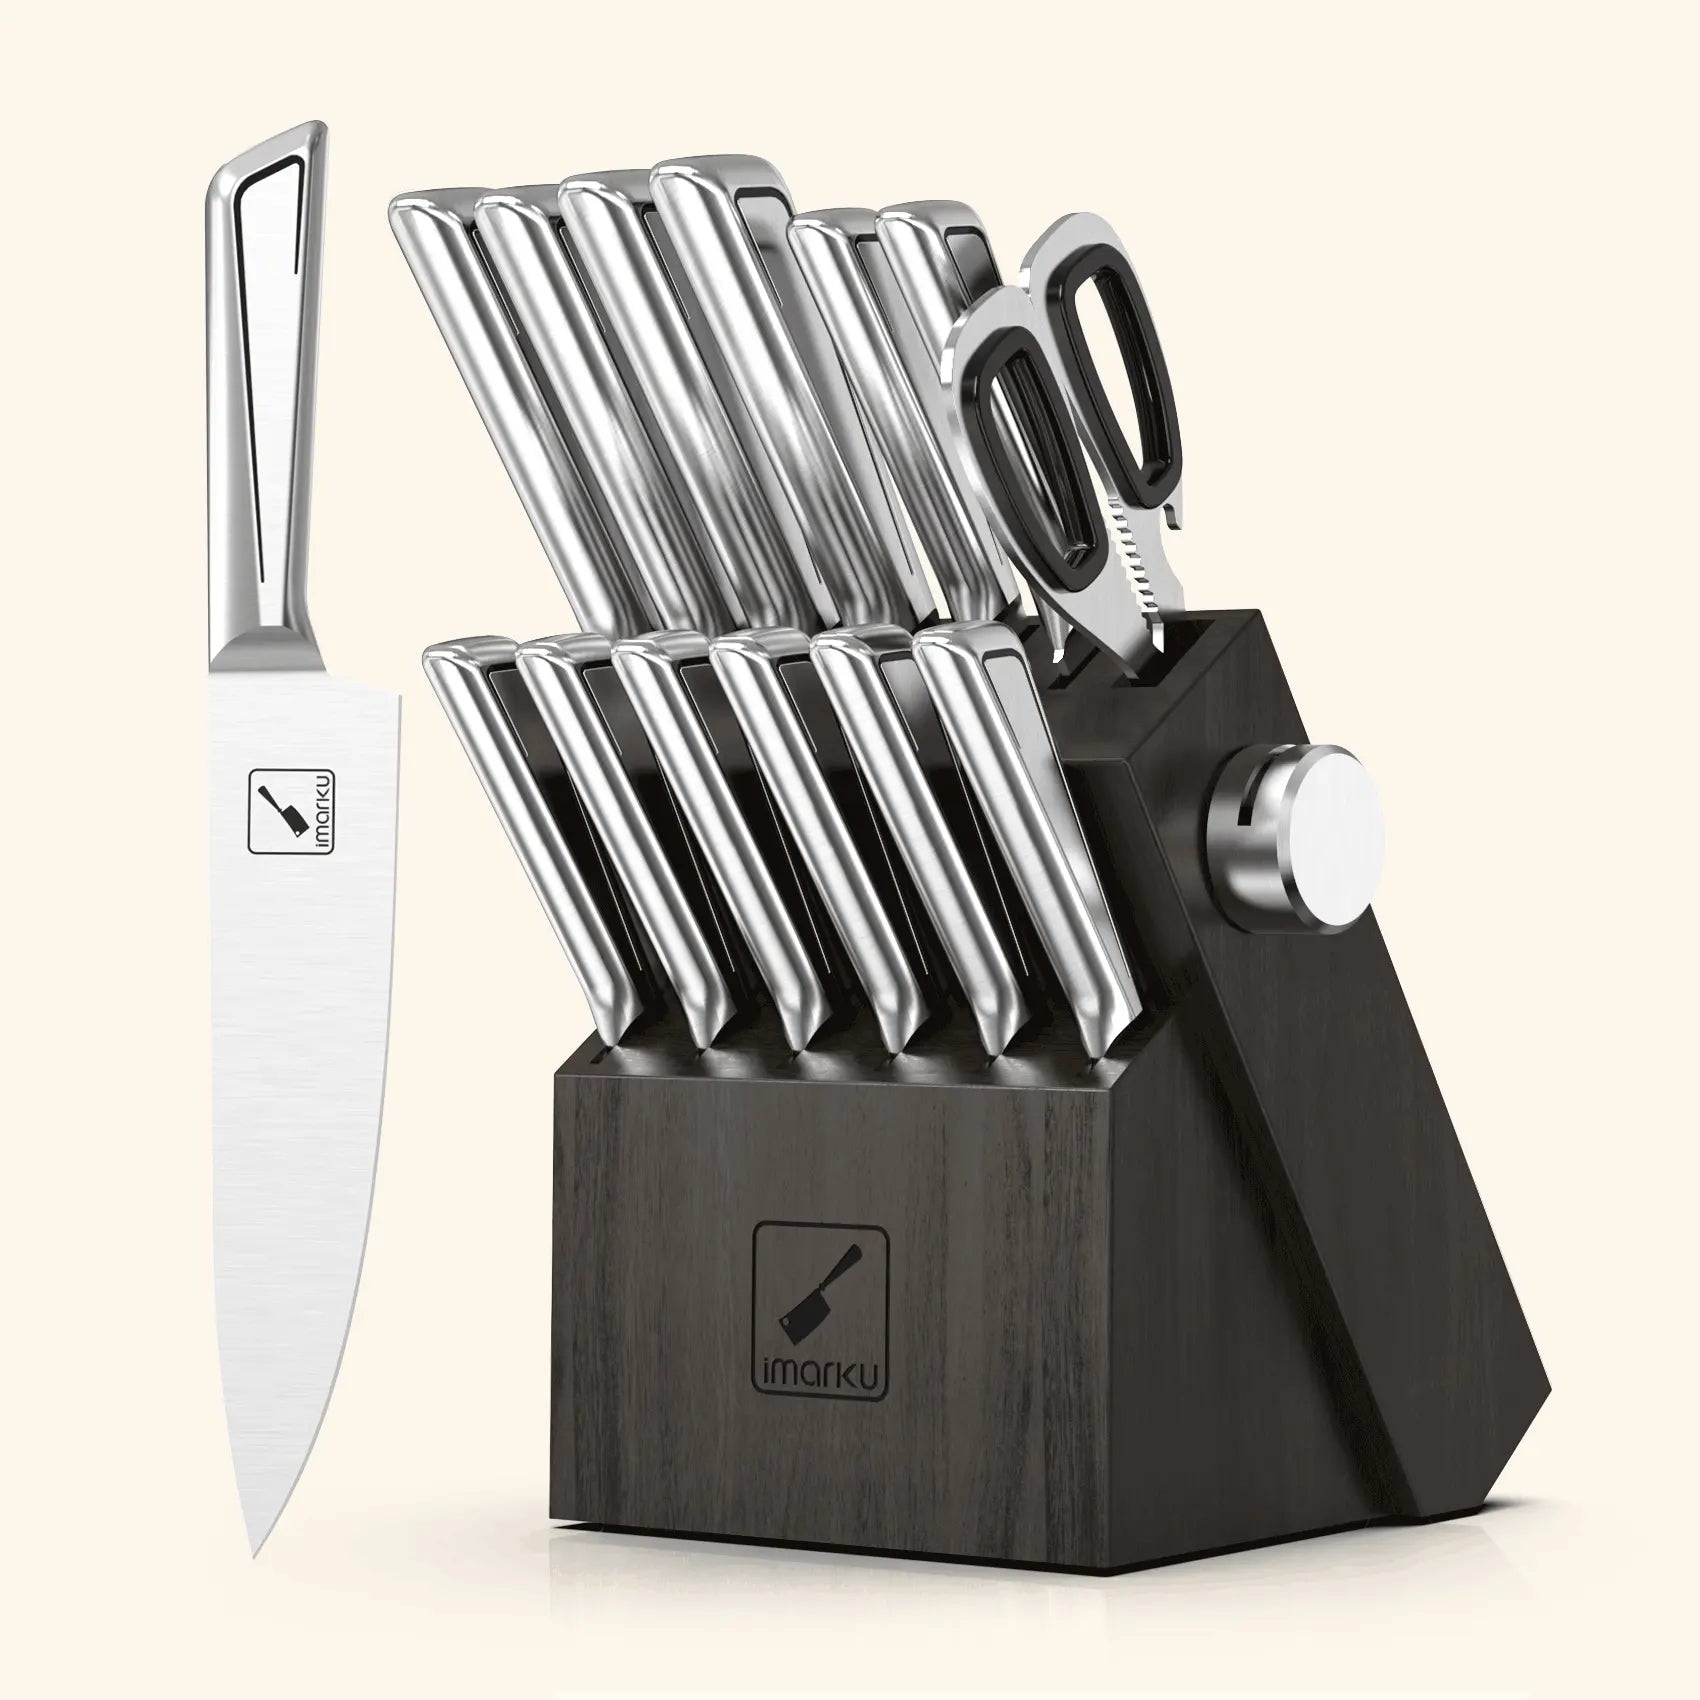 Kitchen Knife Set Non Stick Knives with Storage Serrated Steak Knife, Chef  Knife, Bread Knife, Scissors, Sharpener, 14Pcs Sharp Cutlery Block Sets for